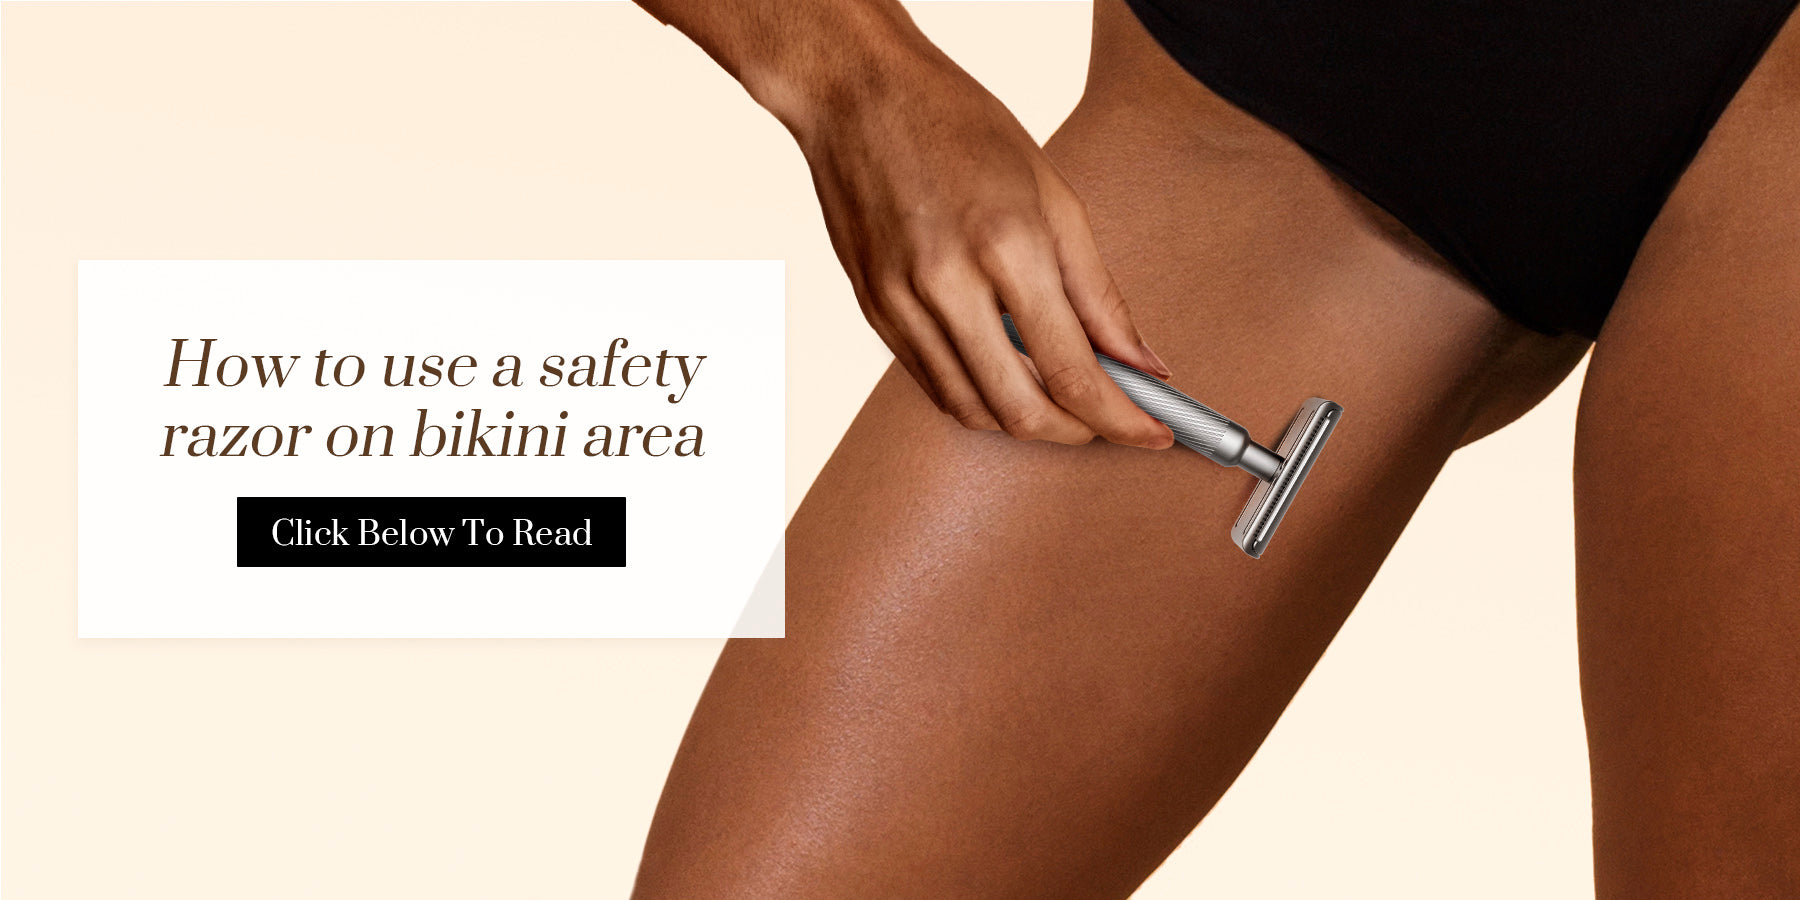 How to use a safety razor on bikini area